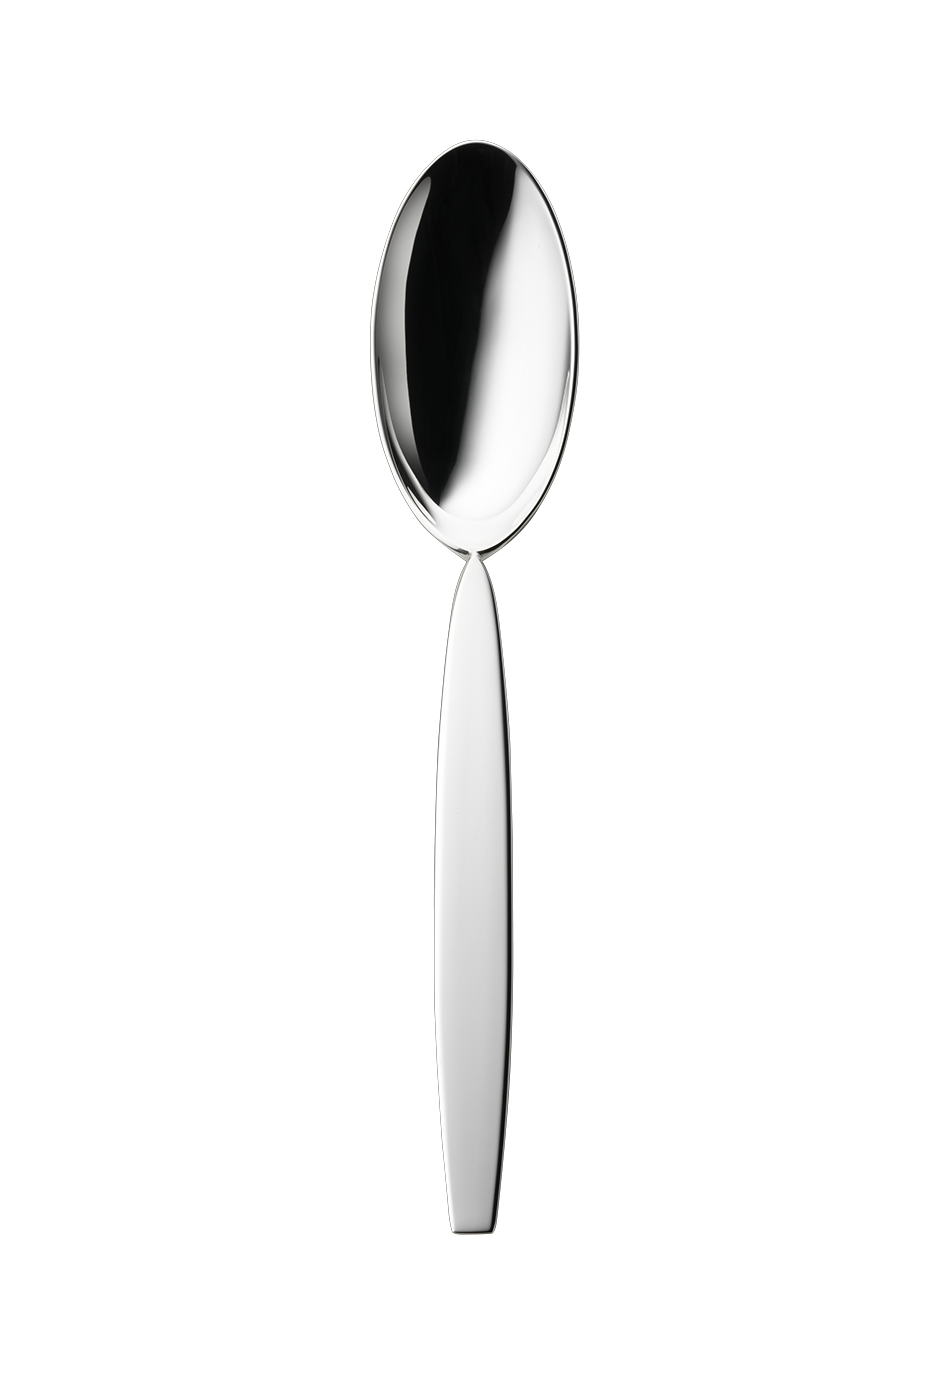 12" Menu Spoon (150g massive silverplated)